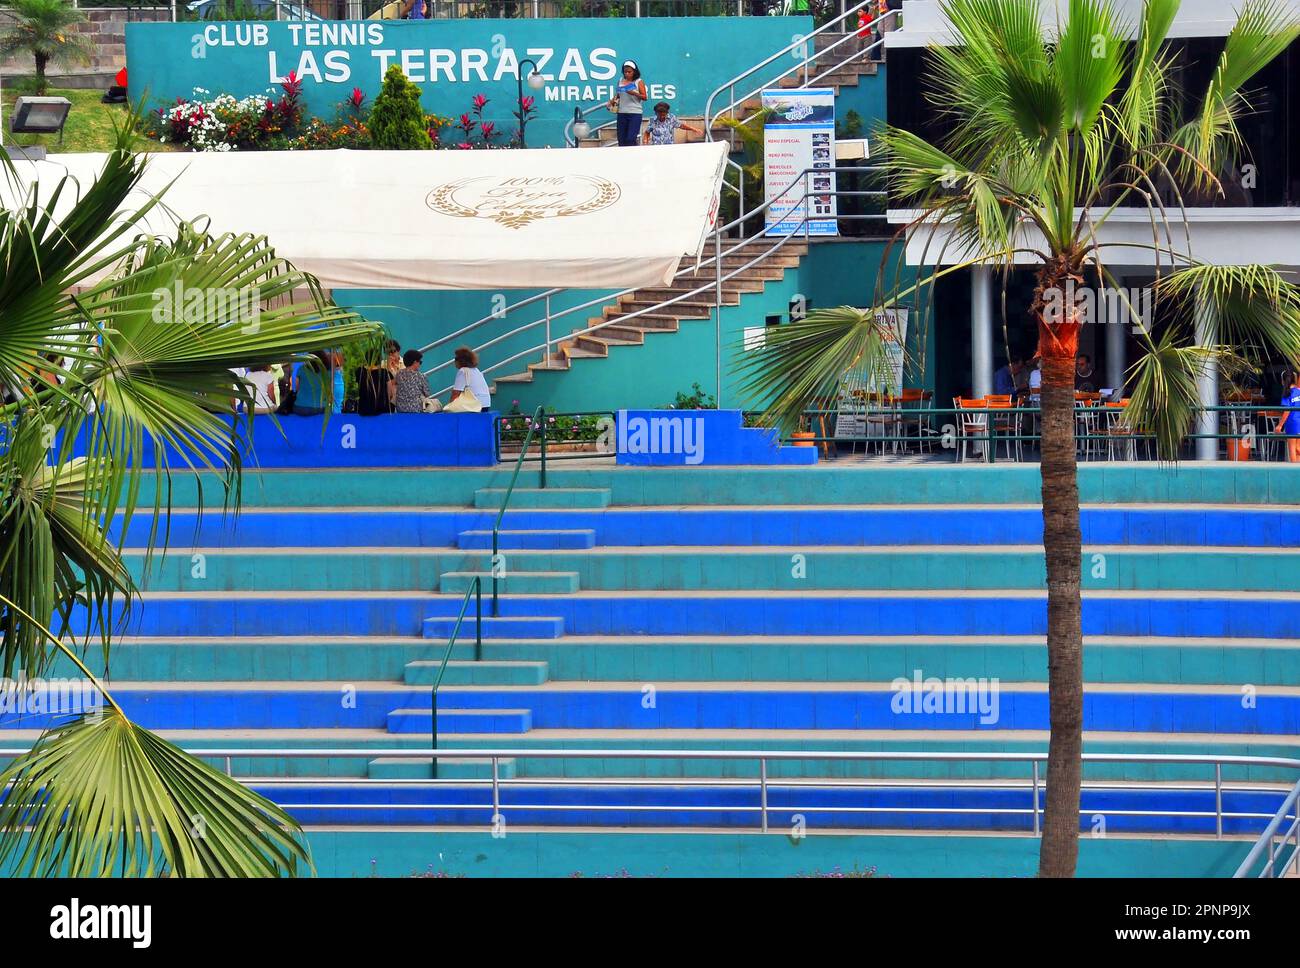 Club tennis Las Terrazas, Miraflores, Liman, Stock Photo